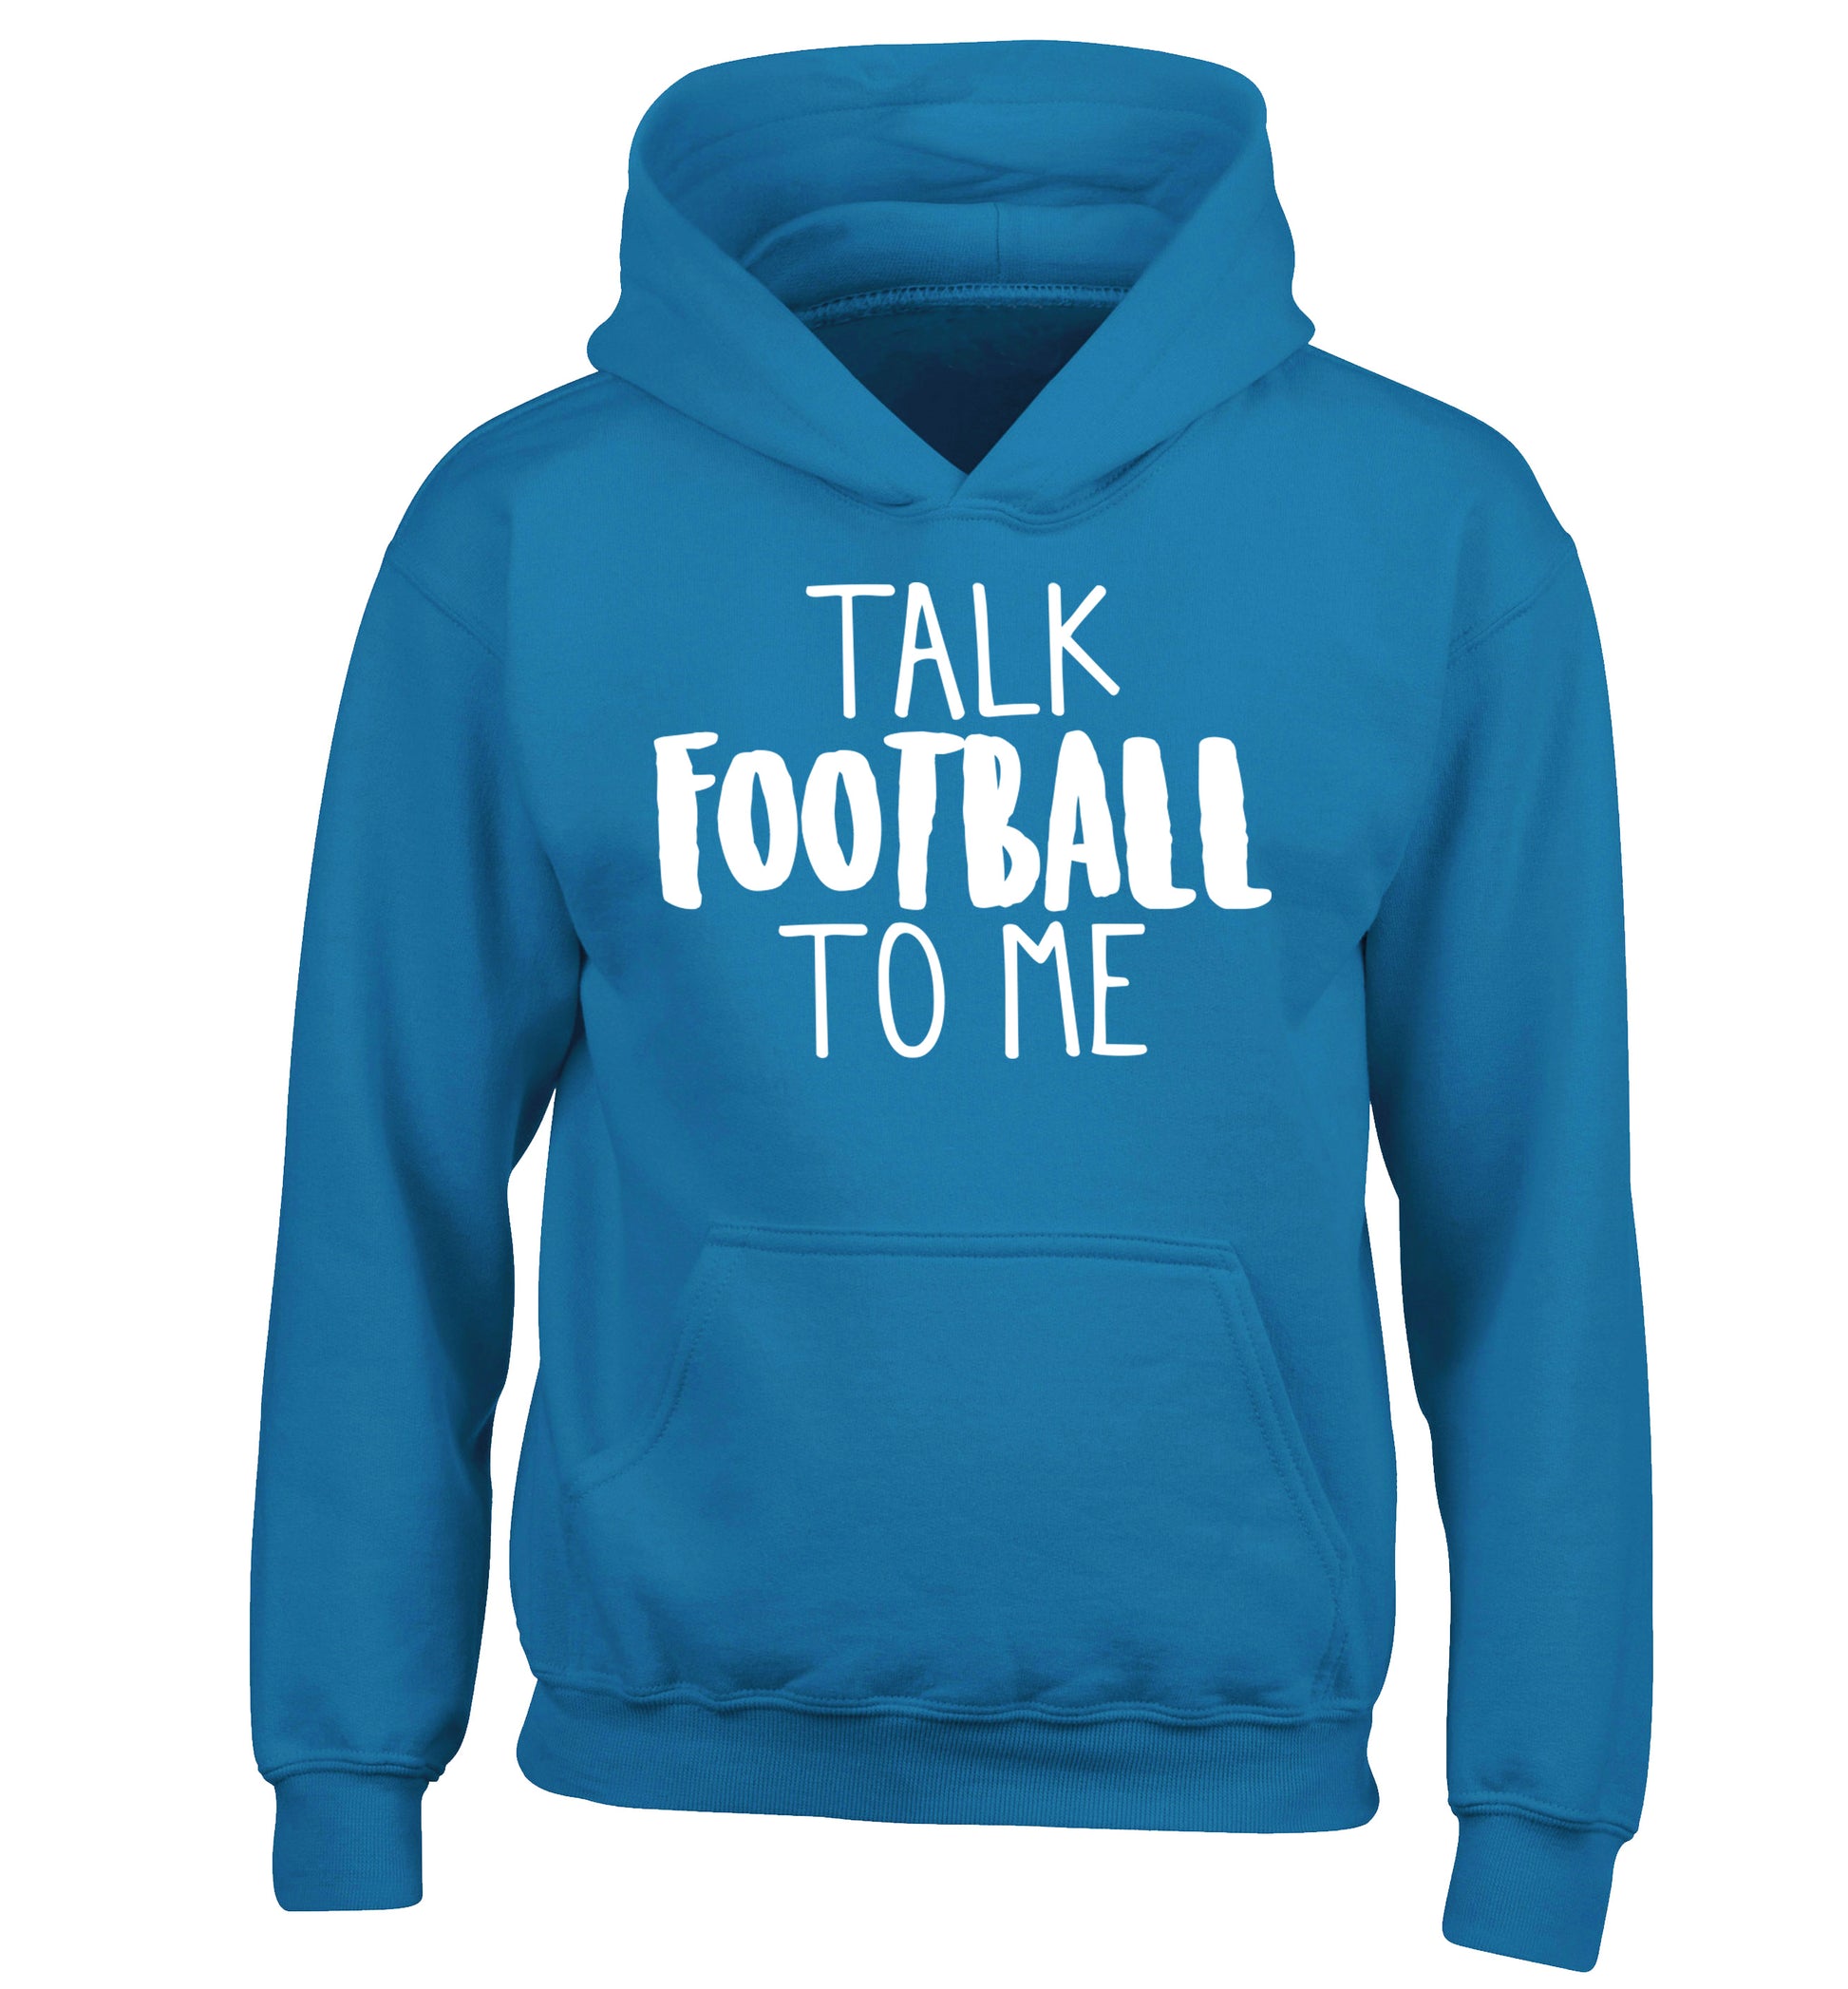 Talk football to me children's blue hoodie 12-14 Years